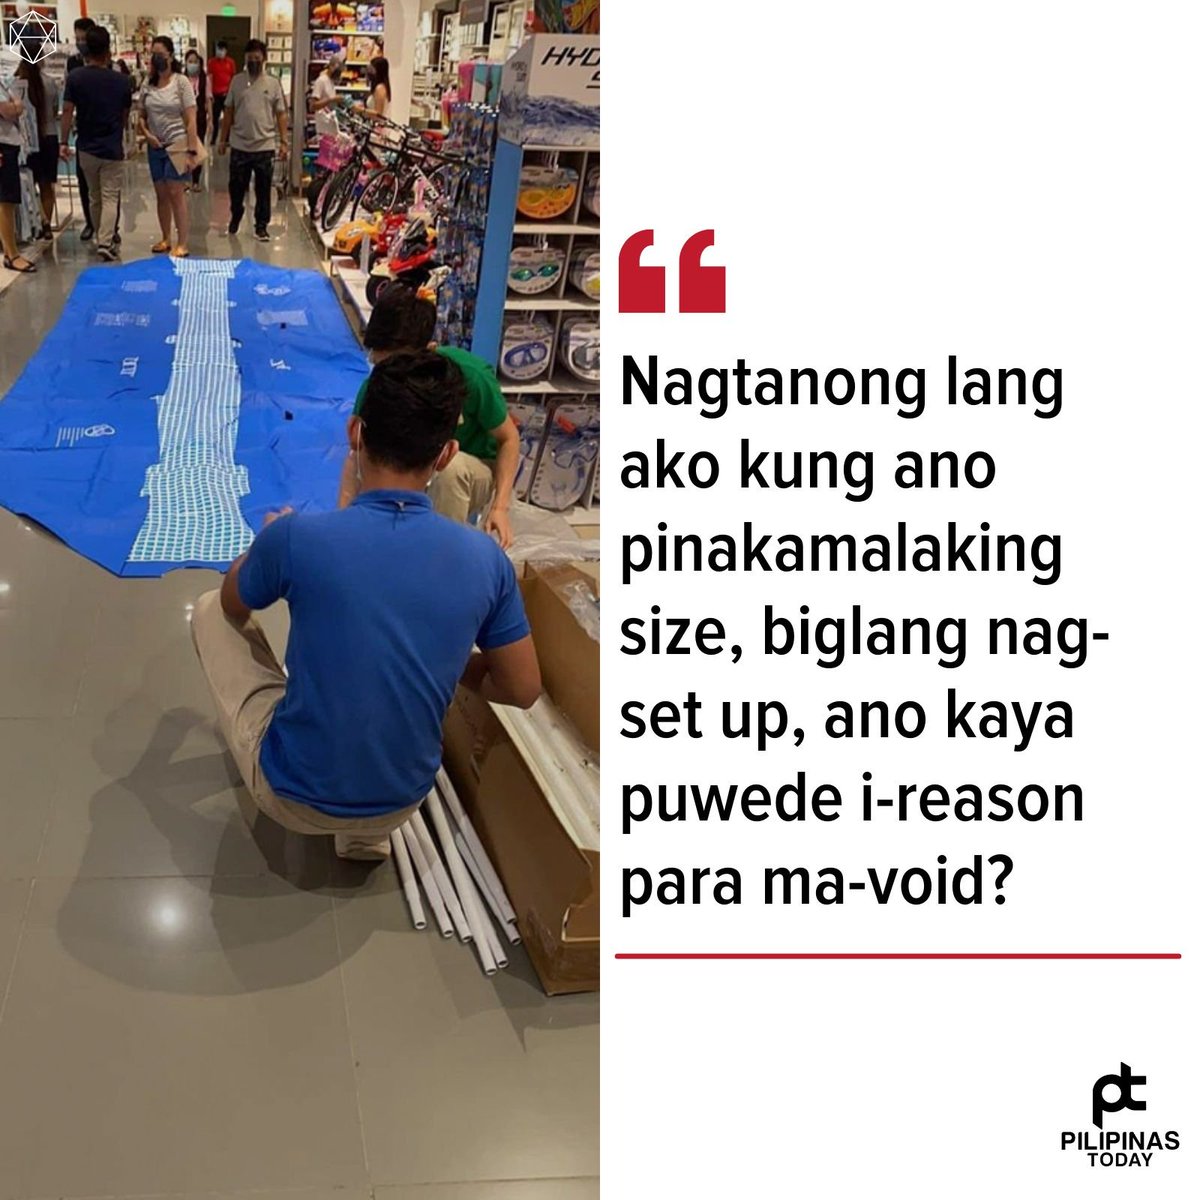 Anti-window shopping? 

#PilipinasToday